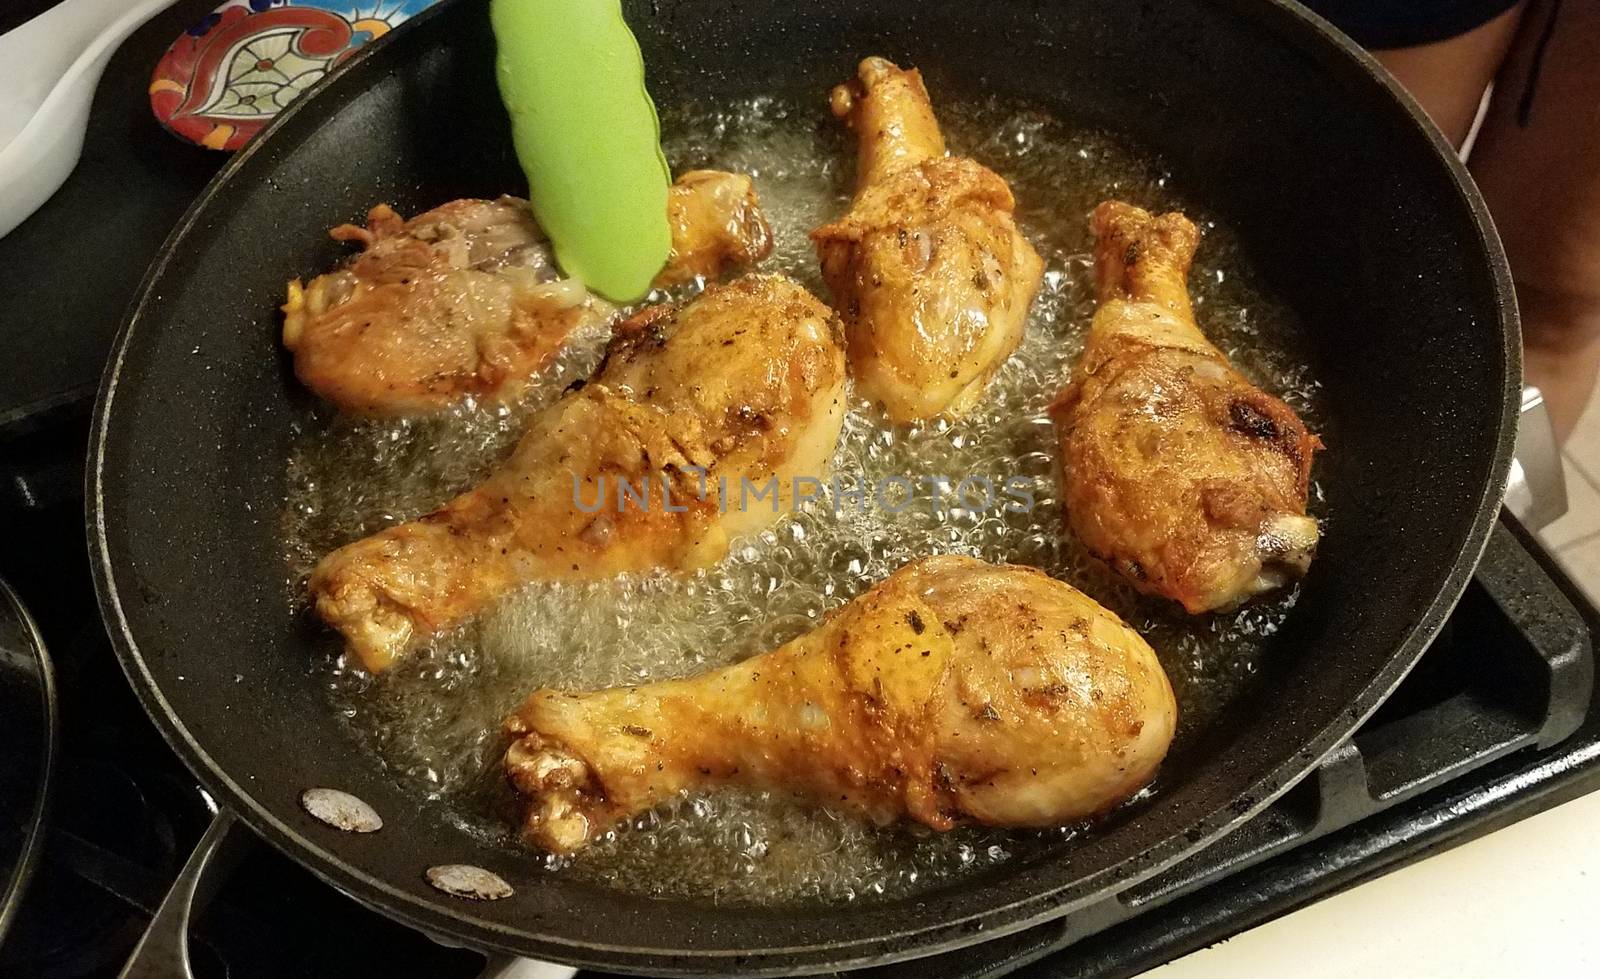 chicken drumsticks cooking in hot oil in frying pan by stockphotofan1